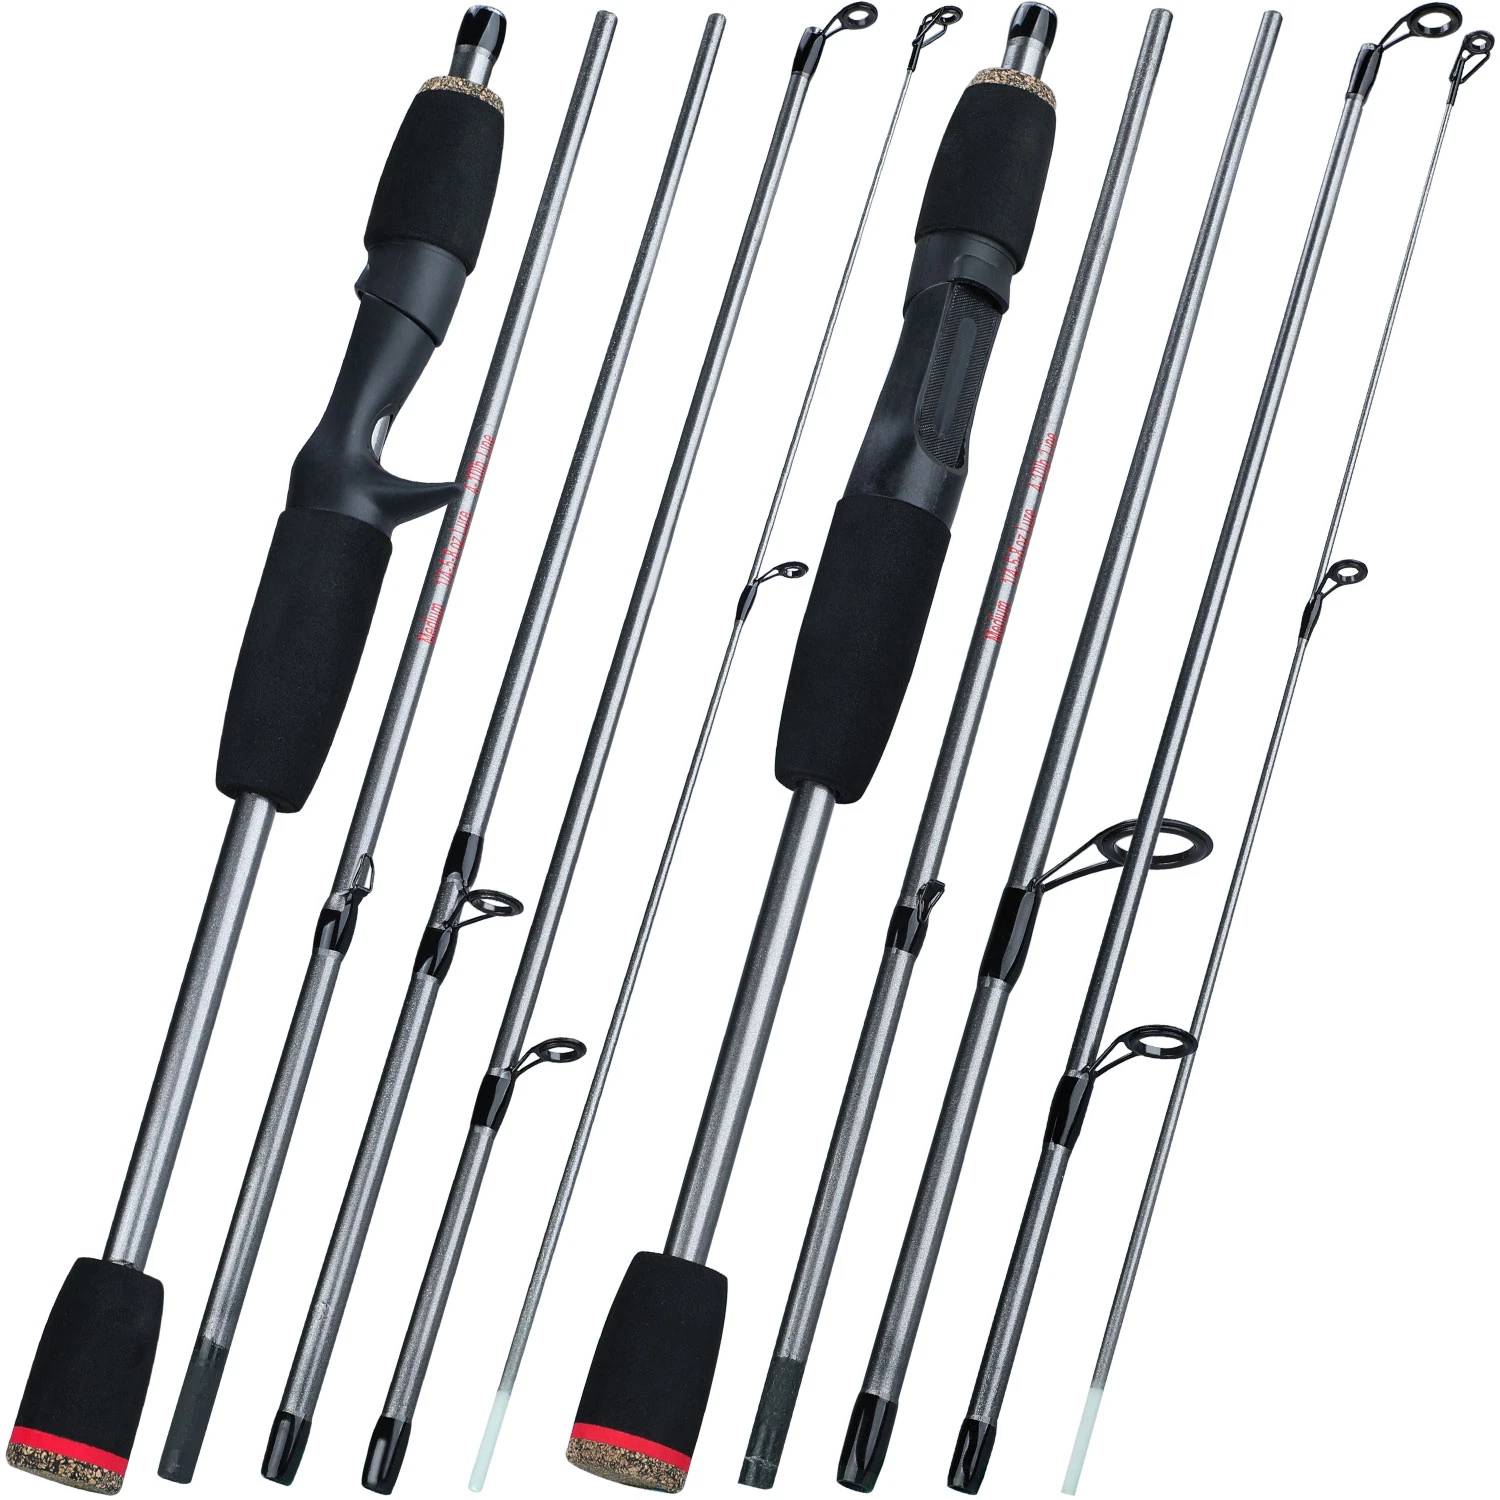 Sougayilang 1.7m/1.66m Portable 5 Section Travel Fishing Rod Ultralight Weight EVA Handle Spinning/Casting Fishing Pole Fishing